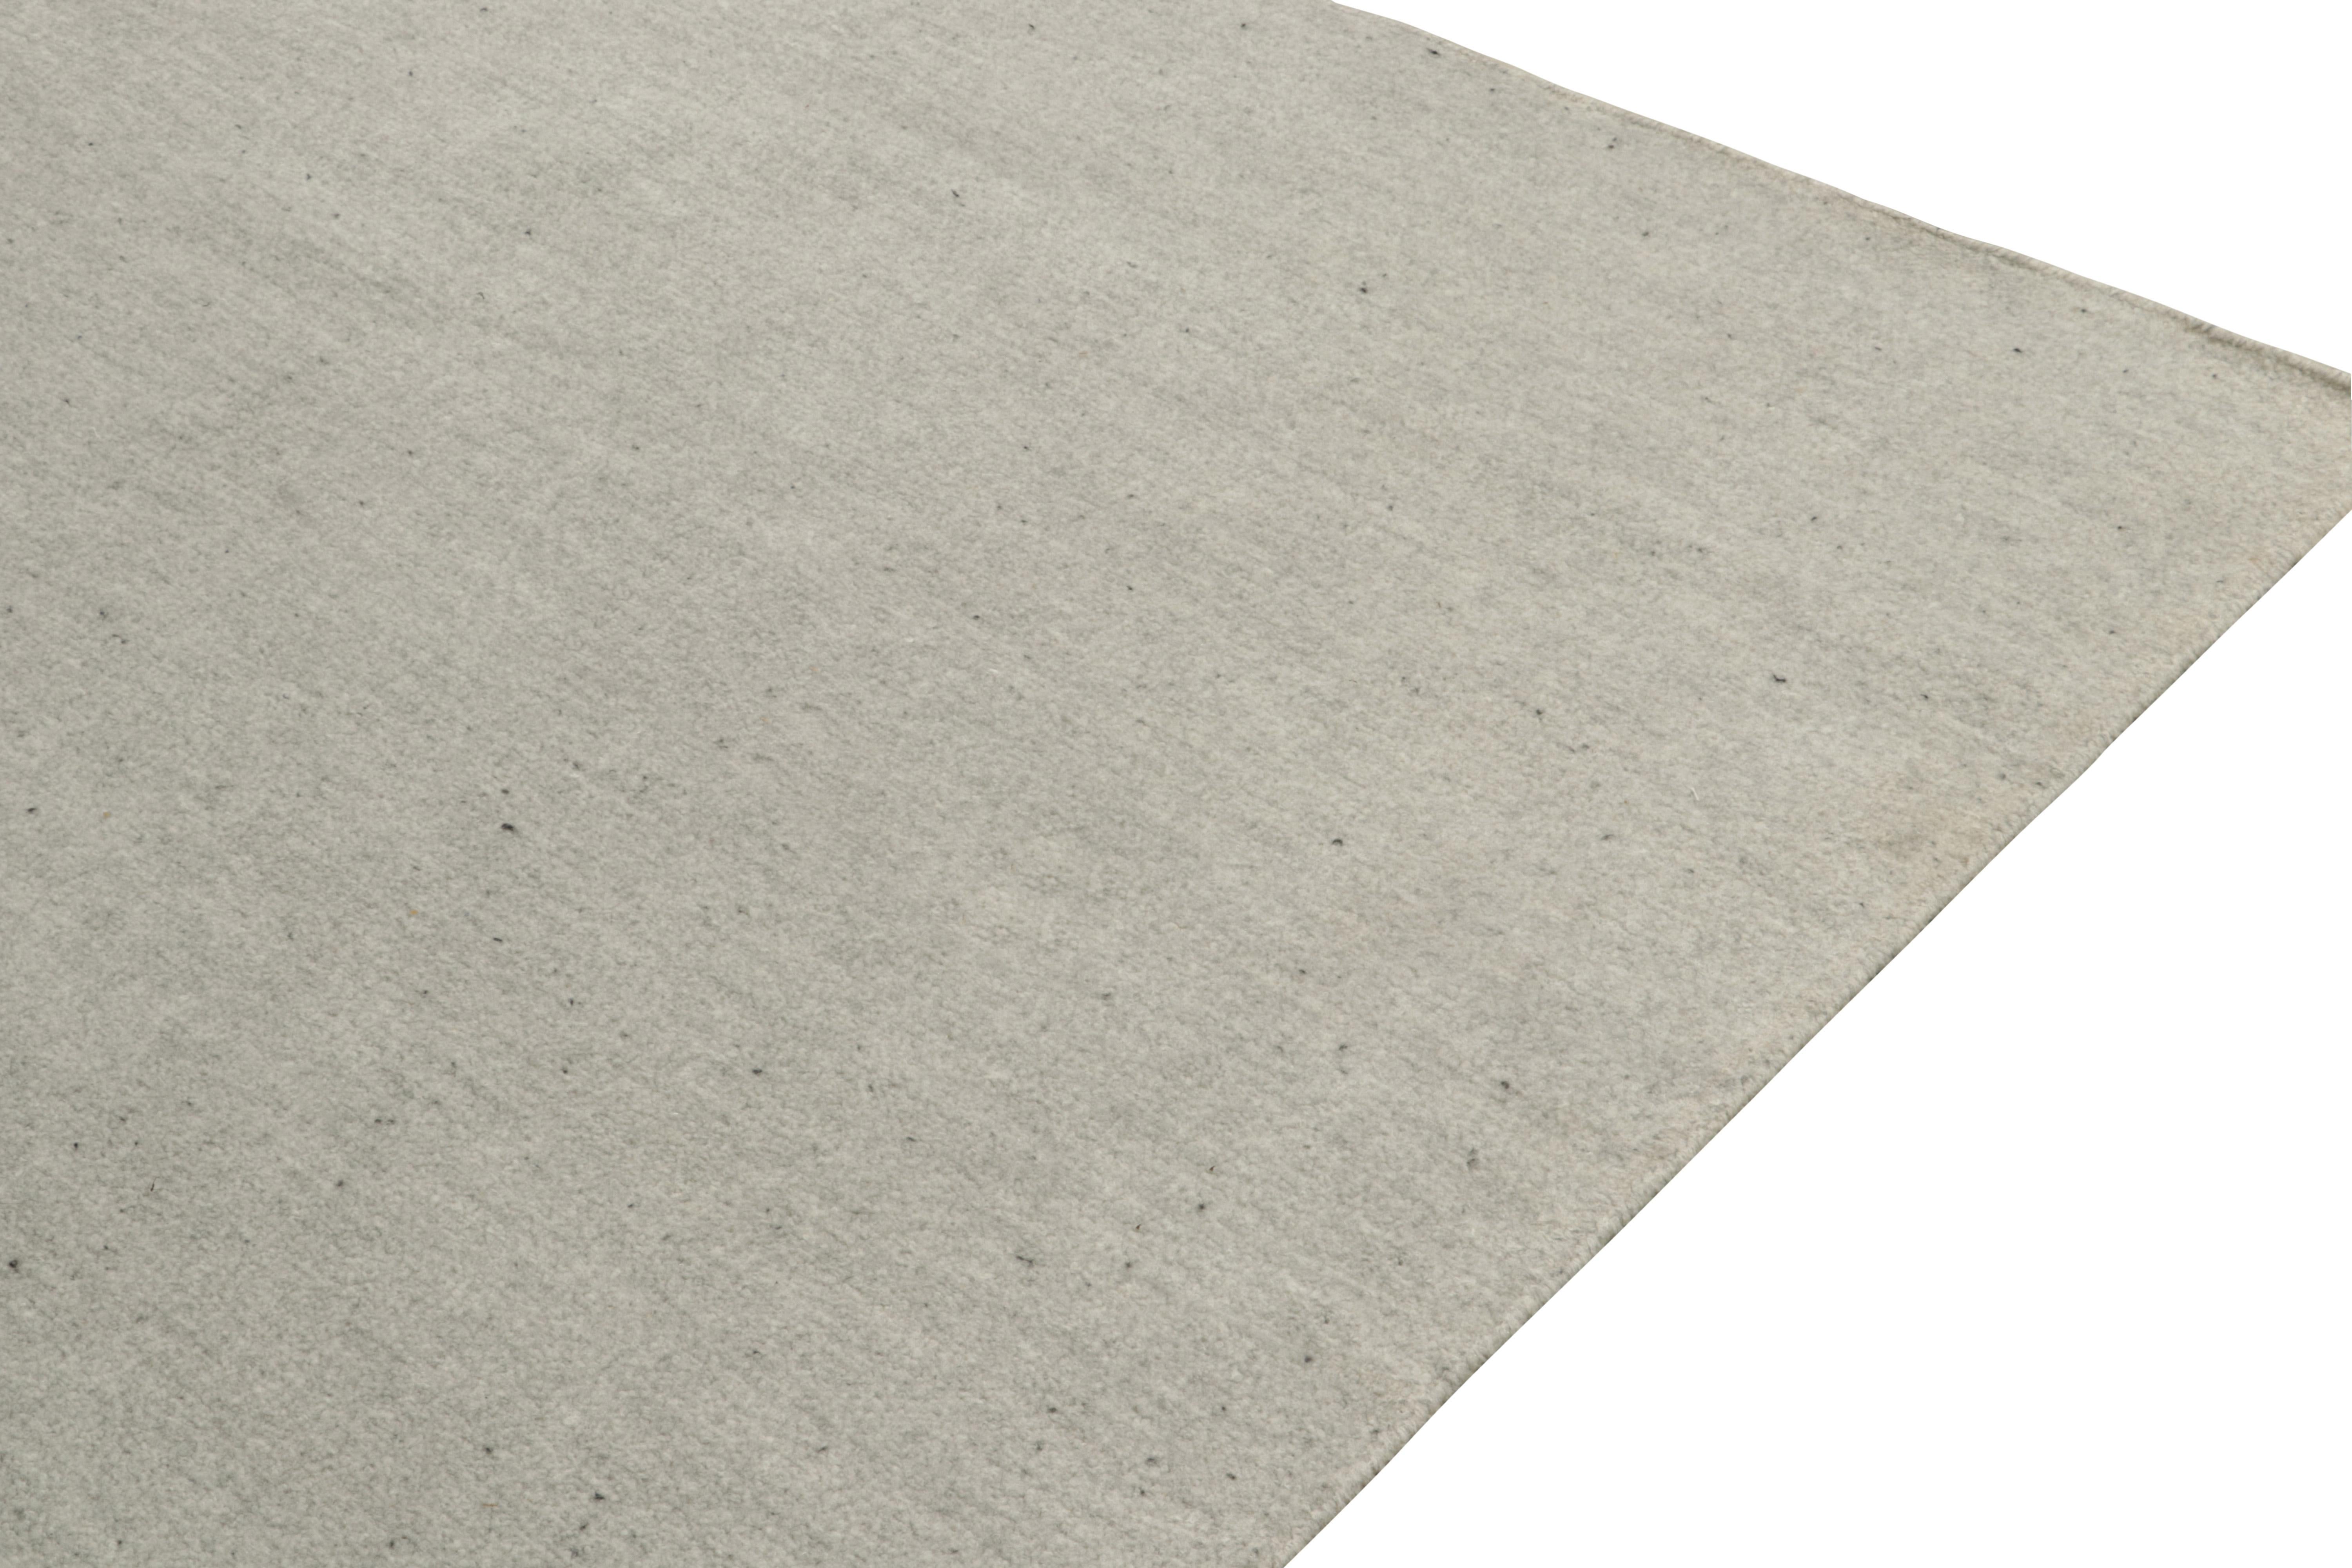 Wool Rug & Kilim’s Contemporary Flatweave rug in Solid Gray Tones, Alpaca Yarn For Sale